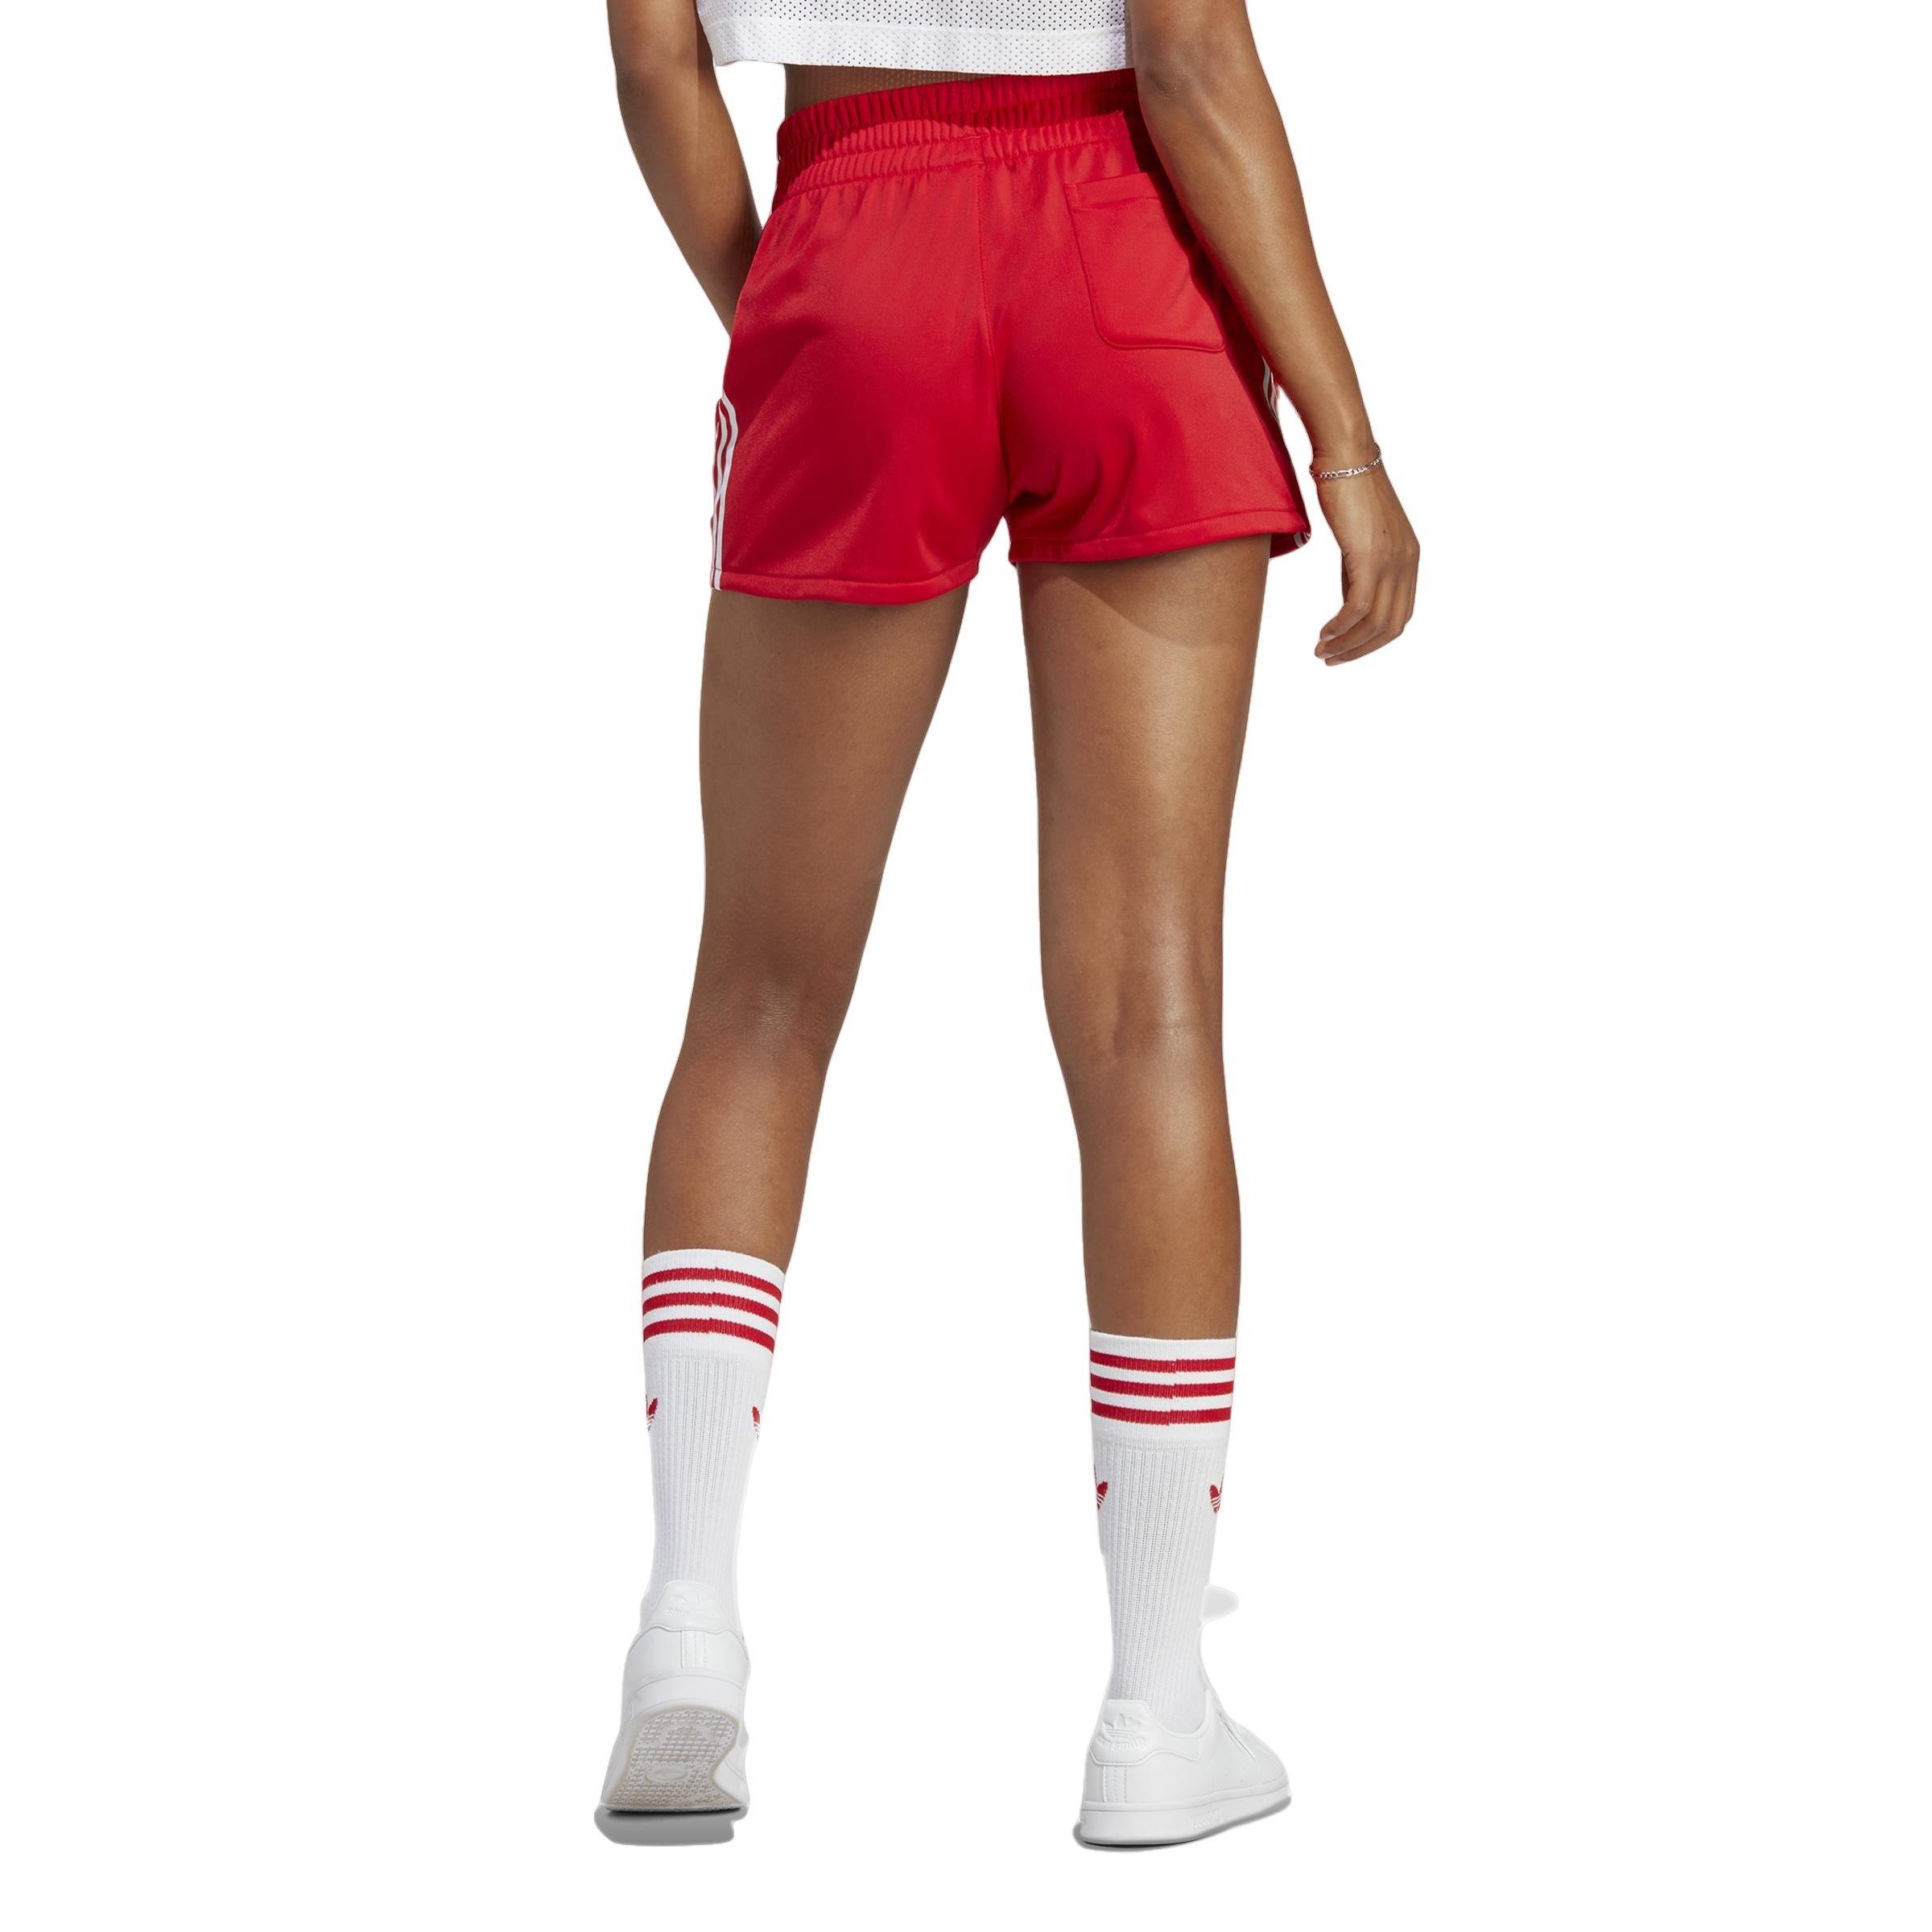 ADIDAS ORIGINALS 3STR SHORTS, Red Women's Athletic Shorts